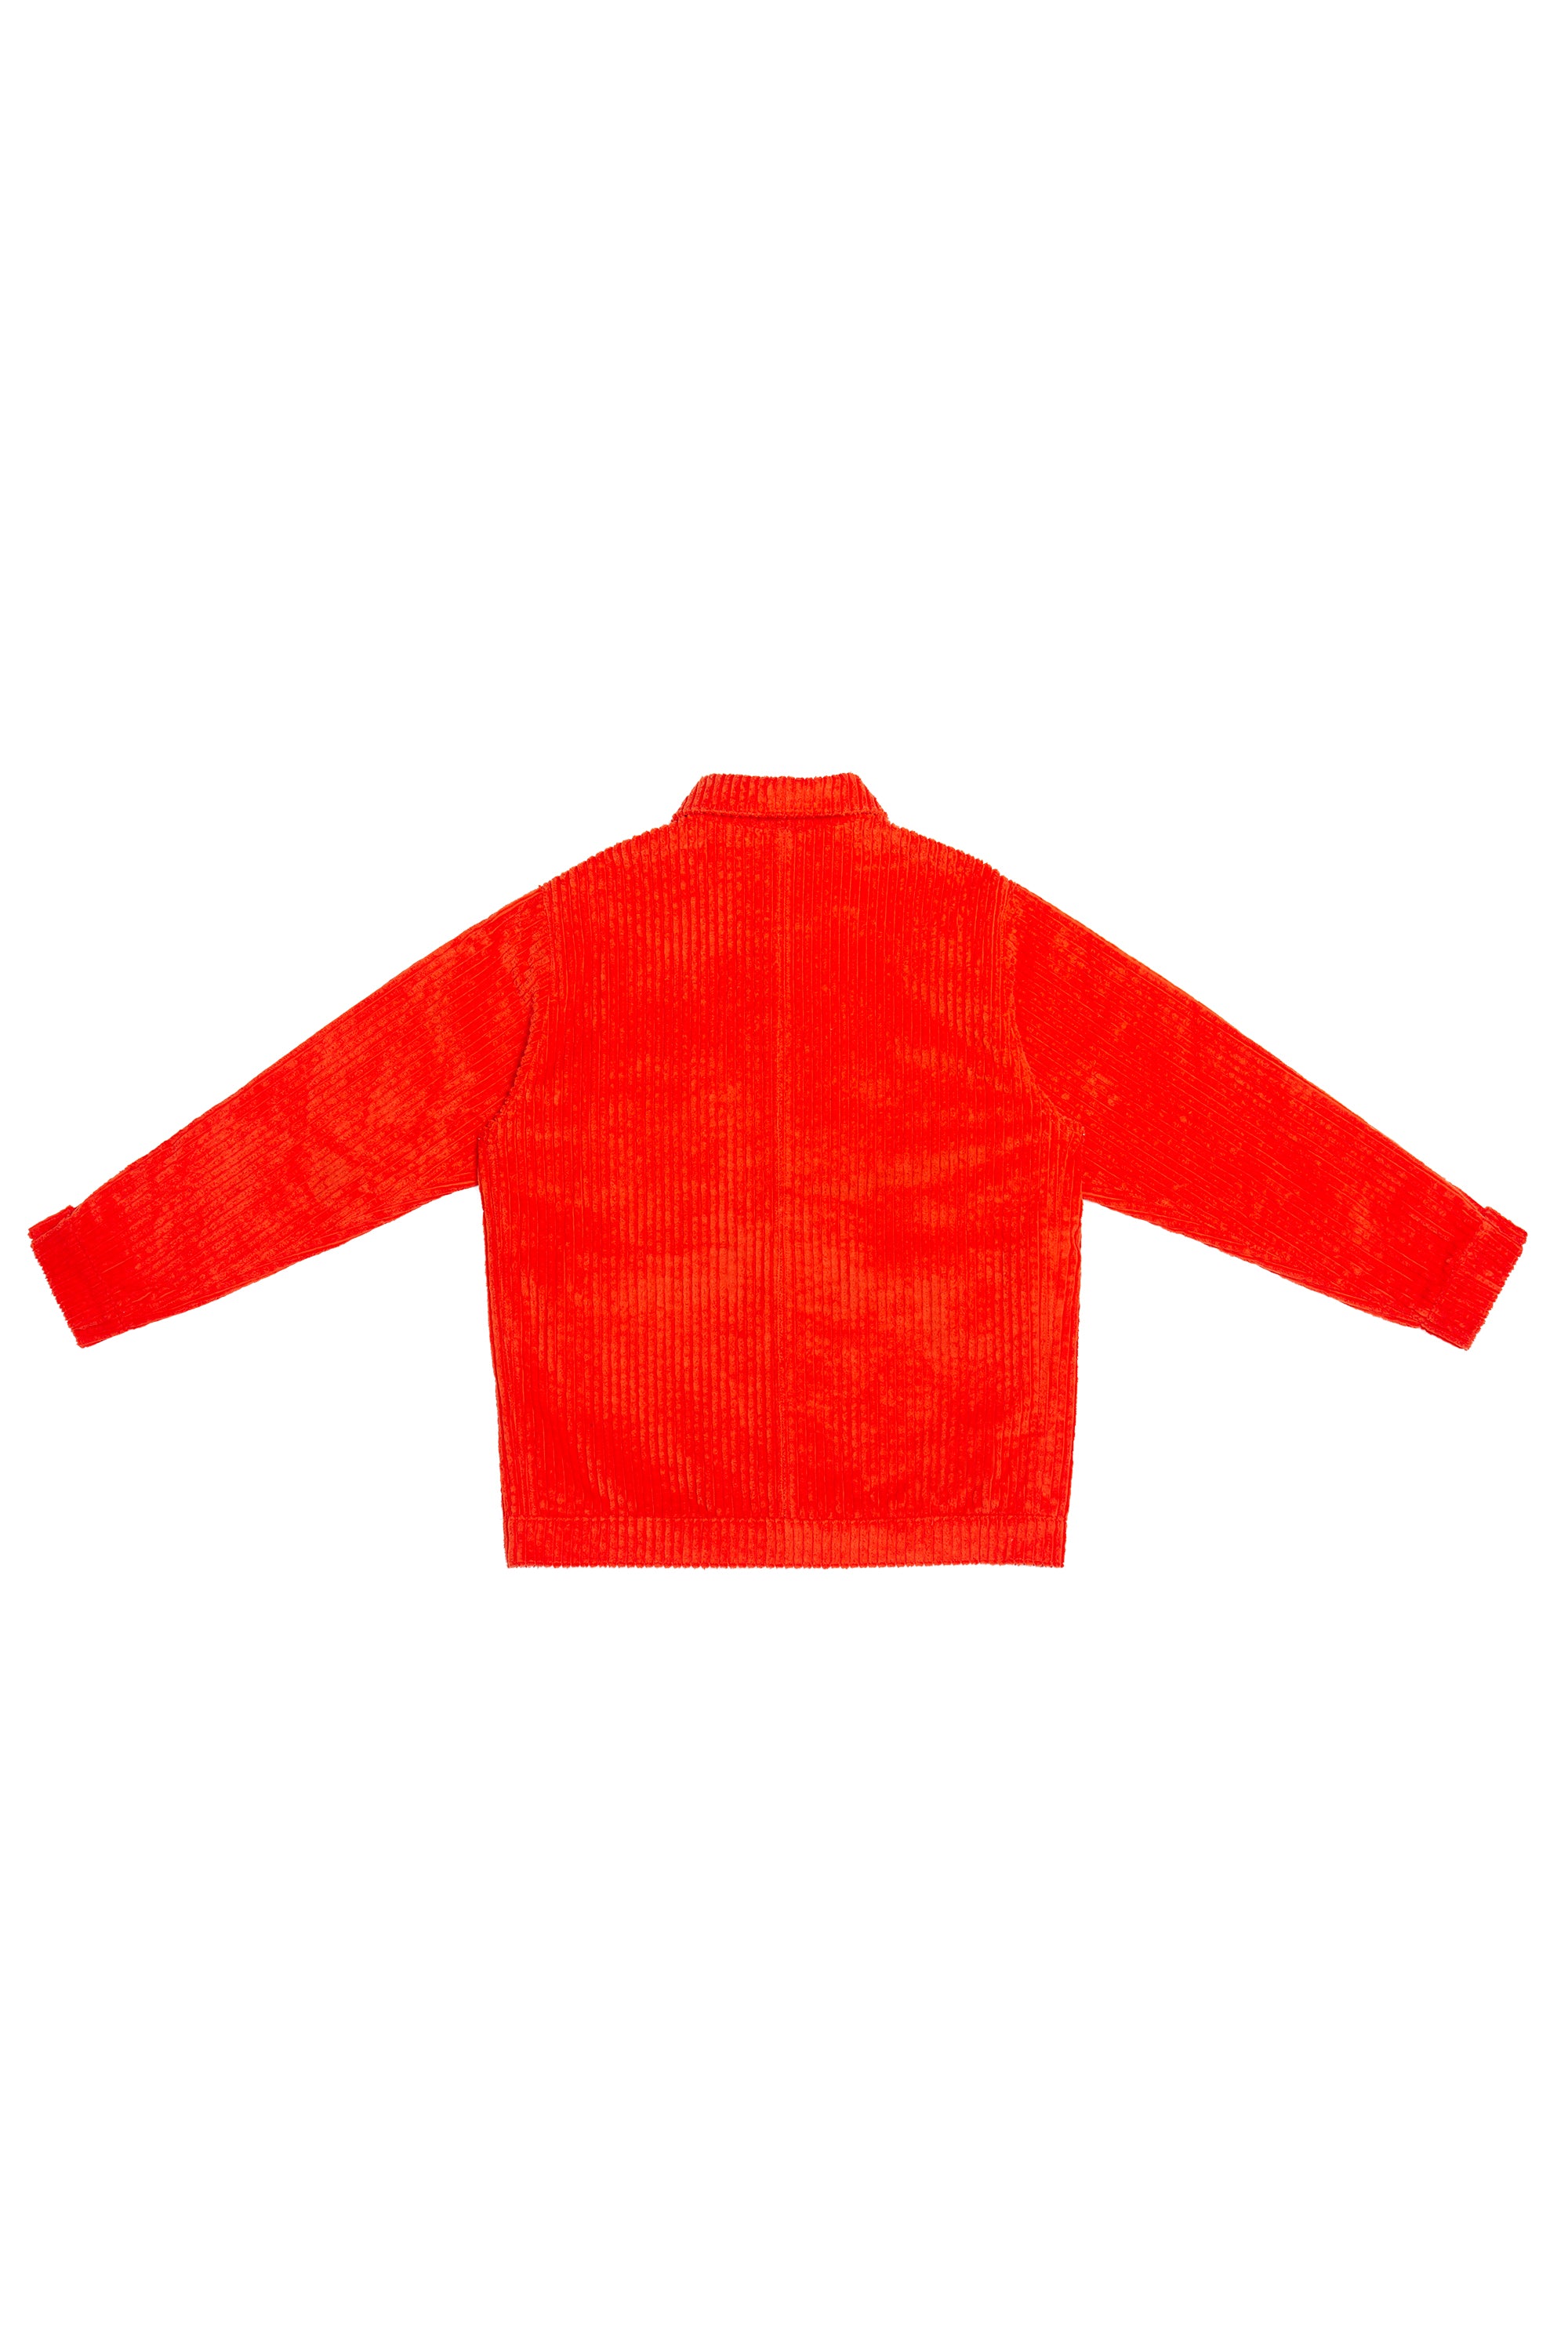 Vintage Red Jantzen Corduroy Coat / Toggle Buttons Cotton Barn 